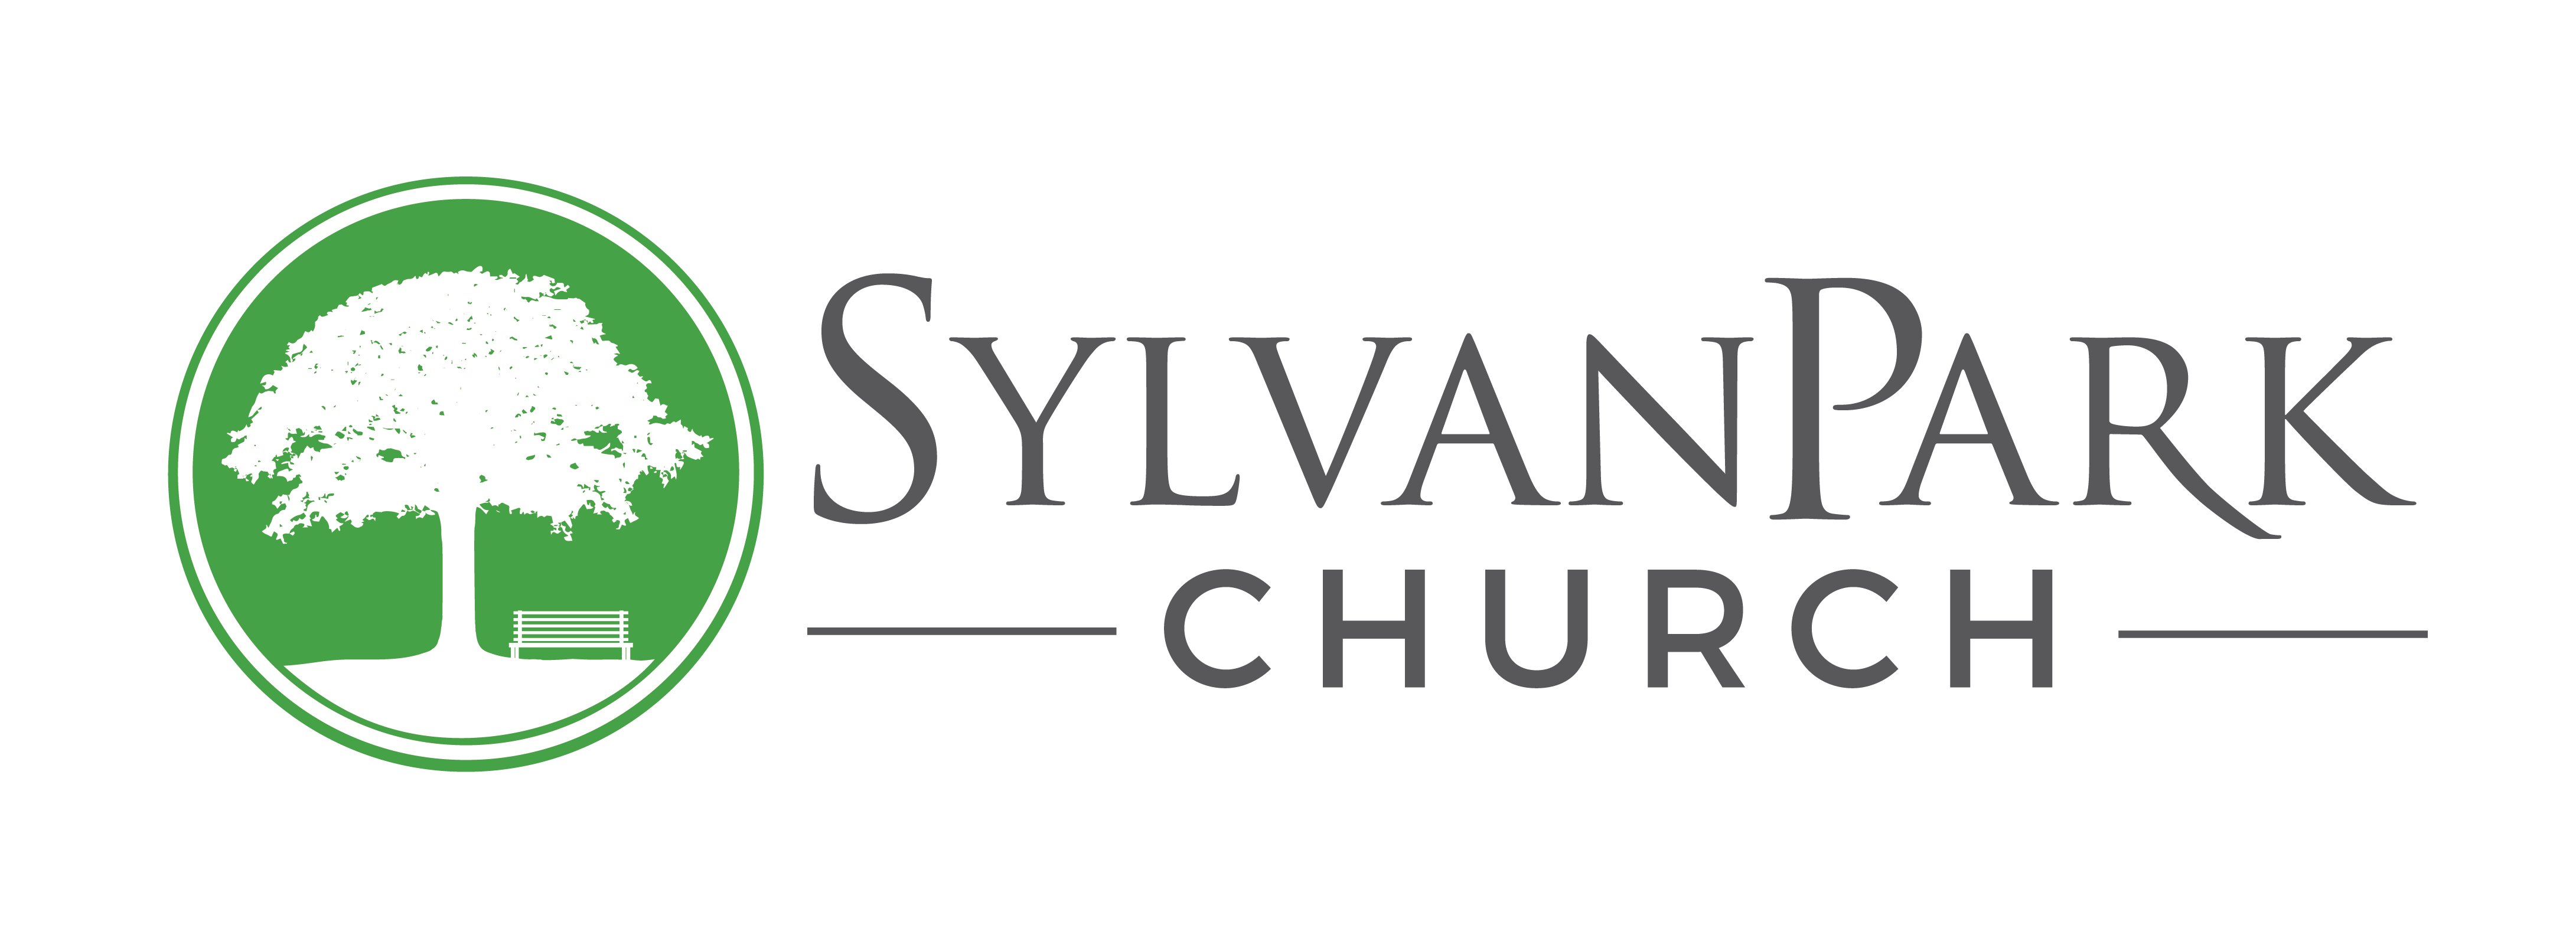 Sylvan Park Church